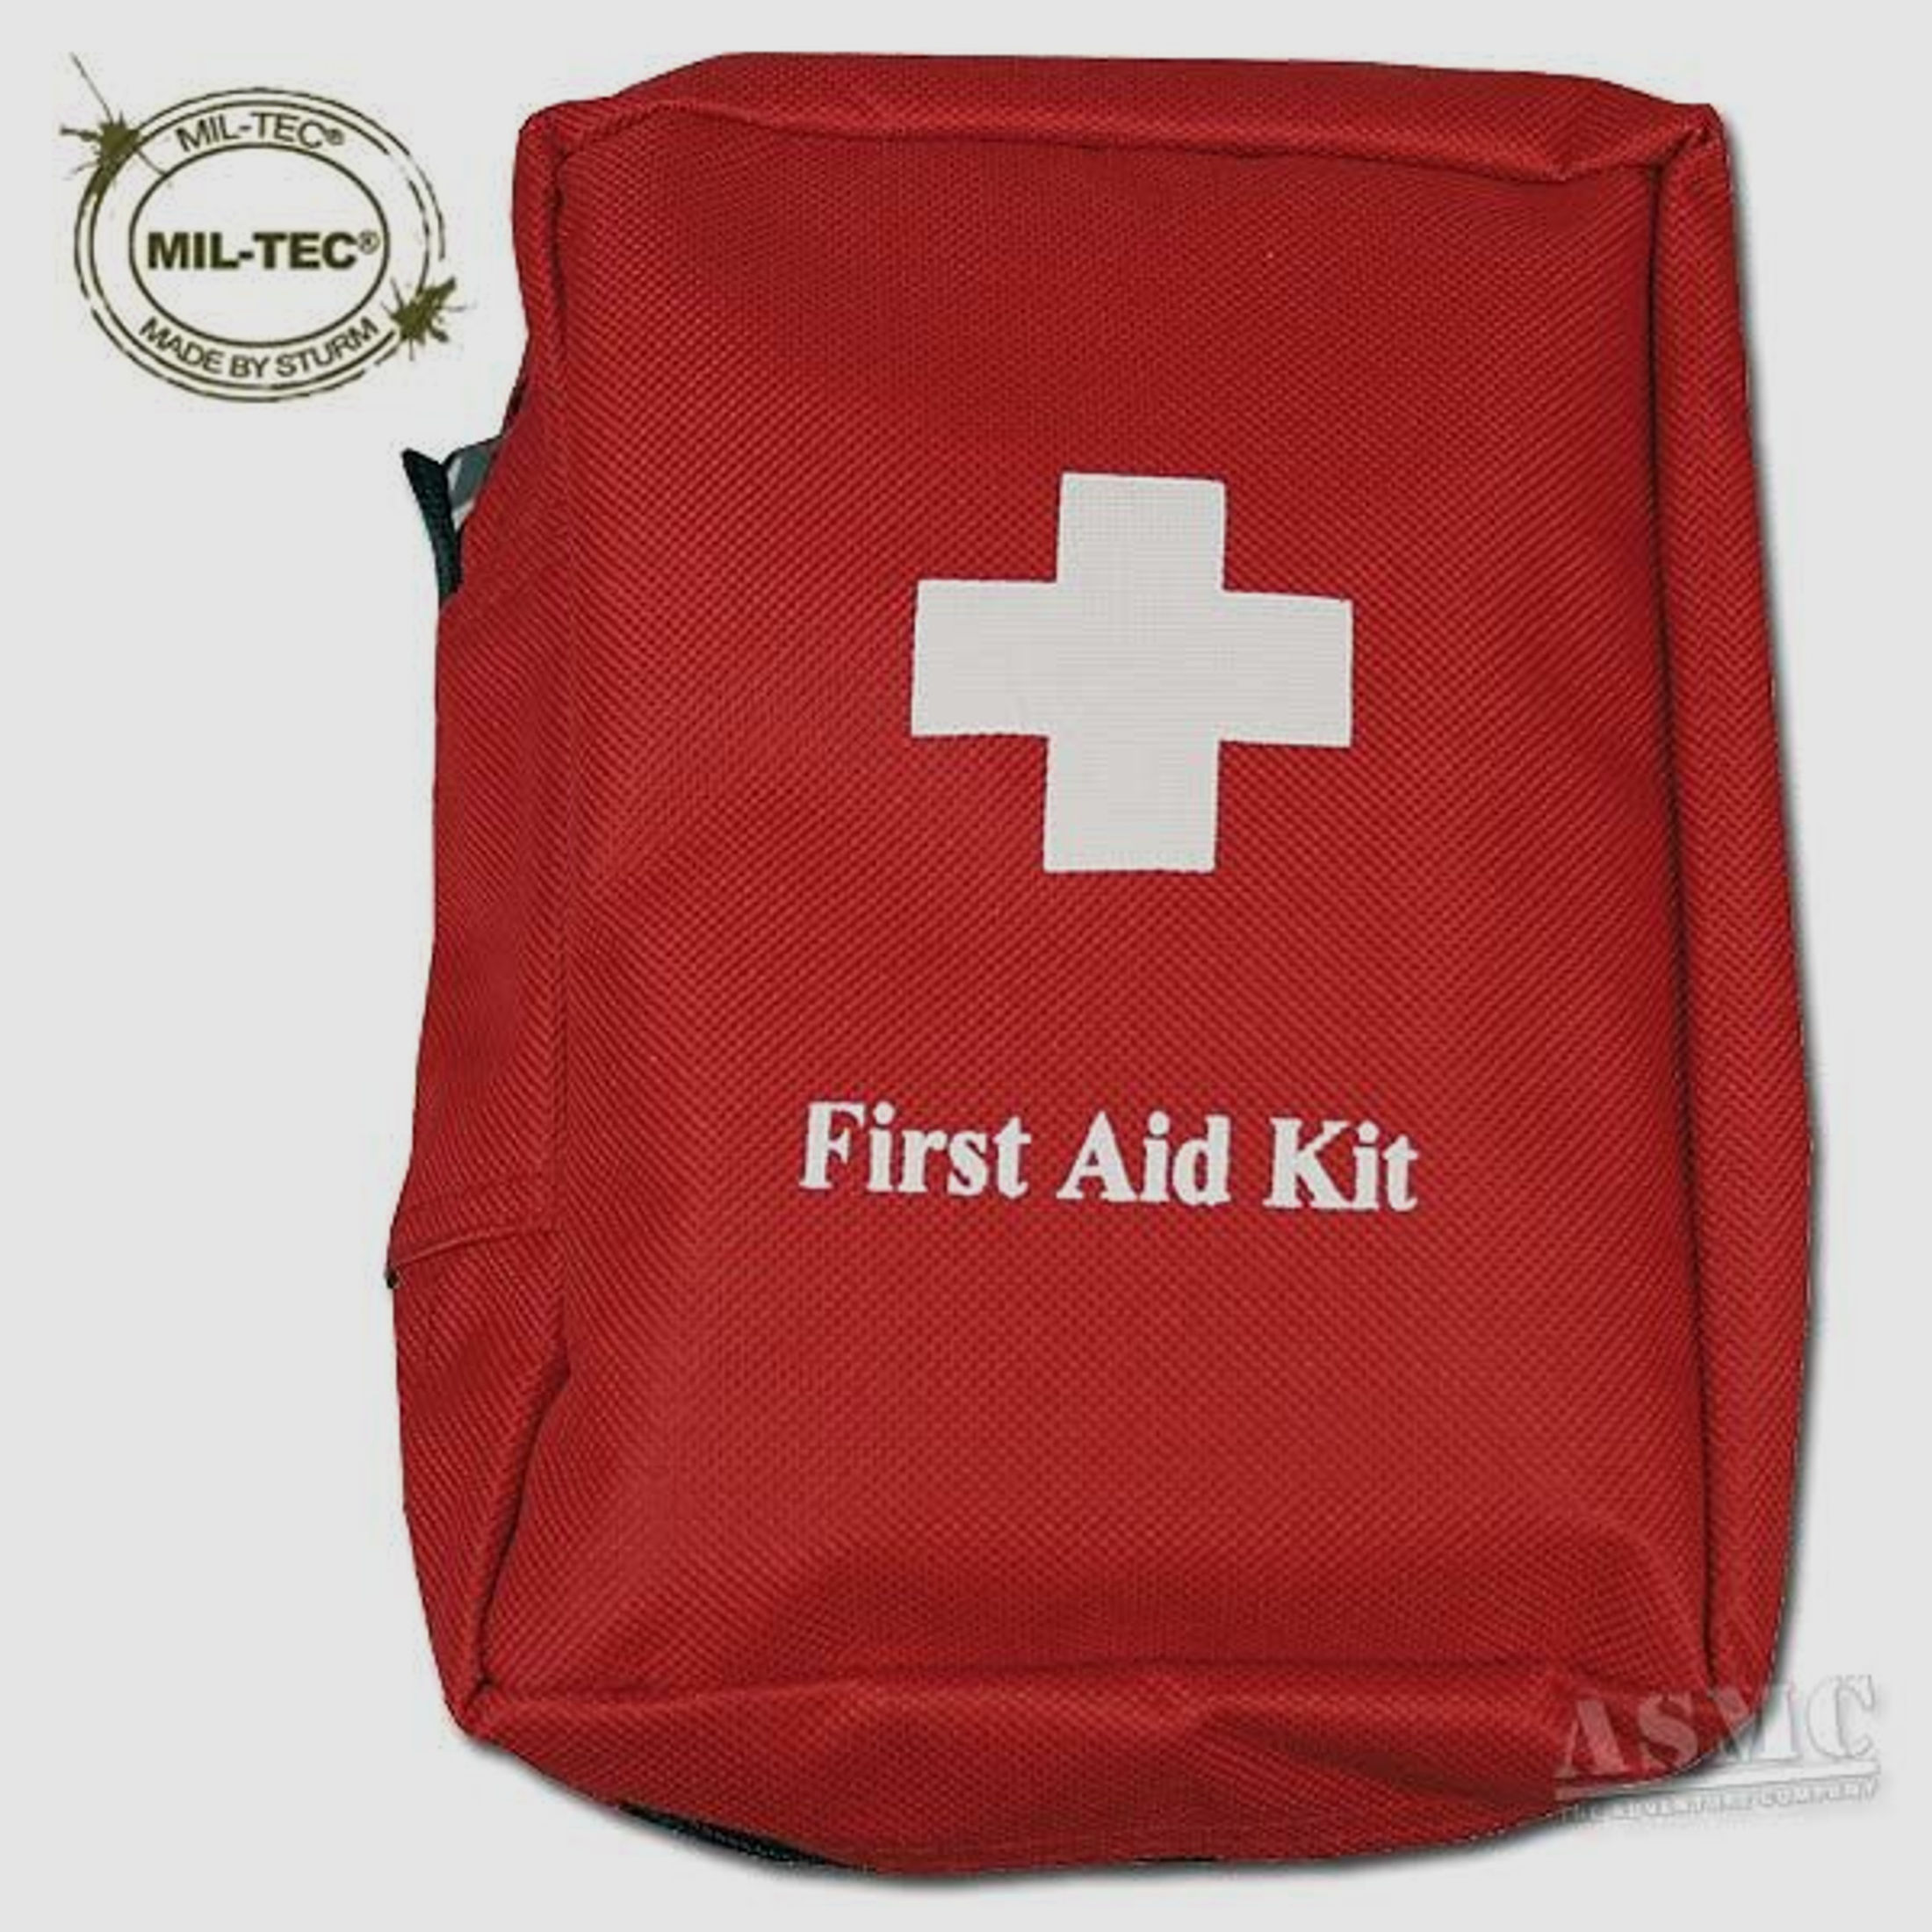 Mil-Tec Mil-Tec First-Aid Kit large rot